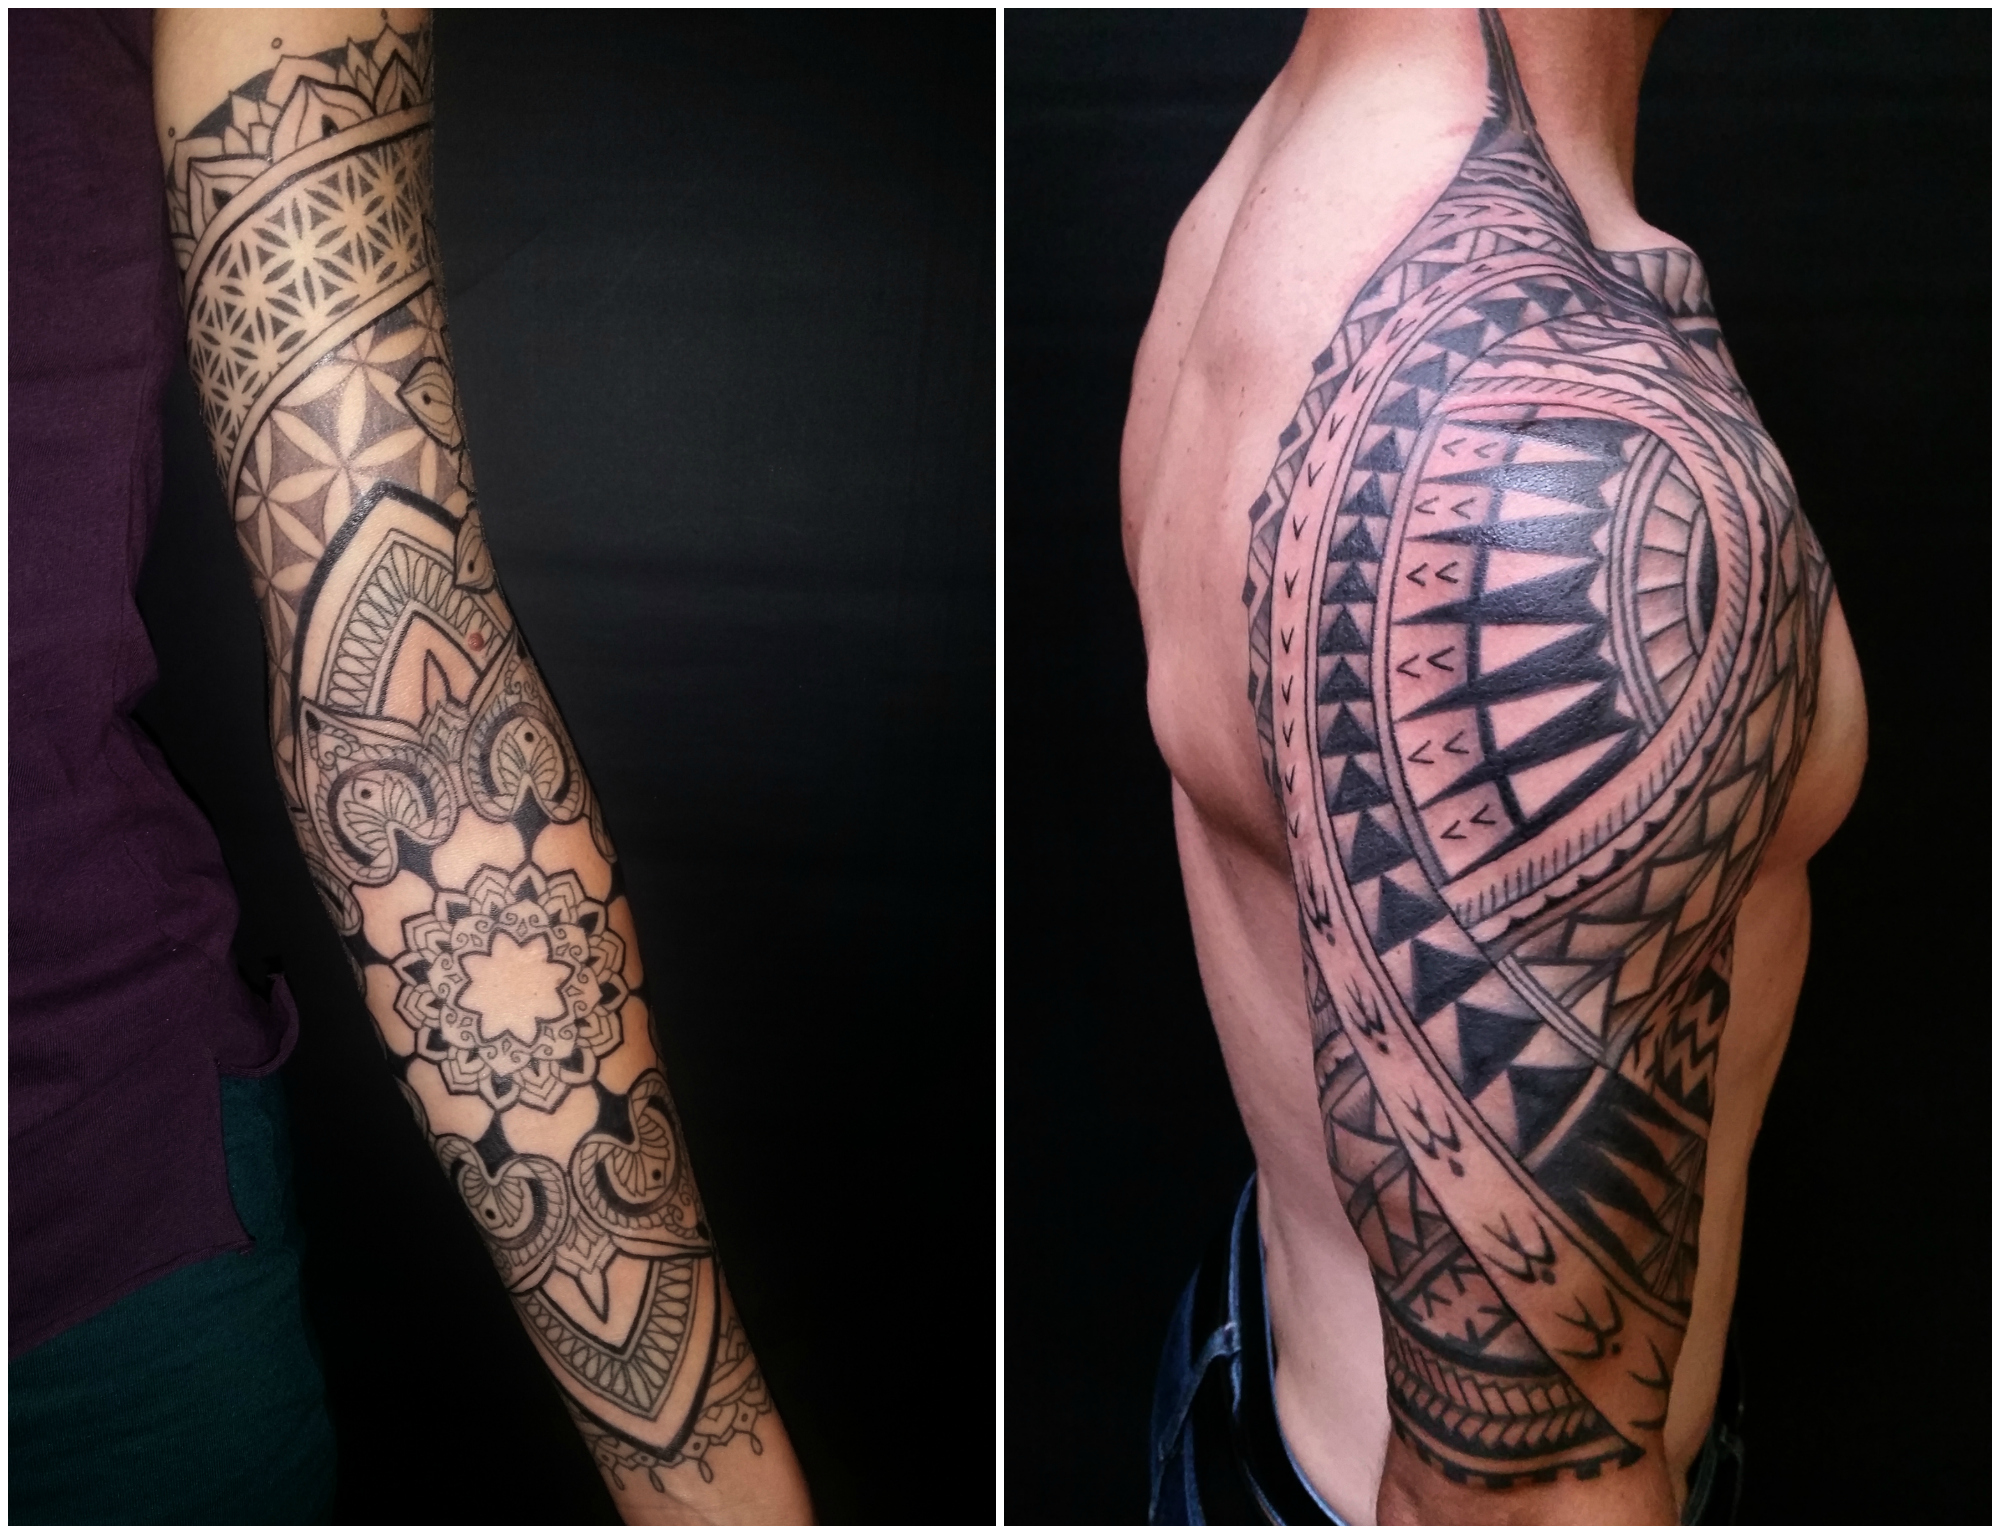 Tattoos by Jacqueline Spoerle